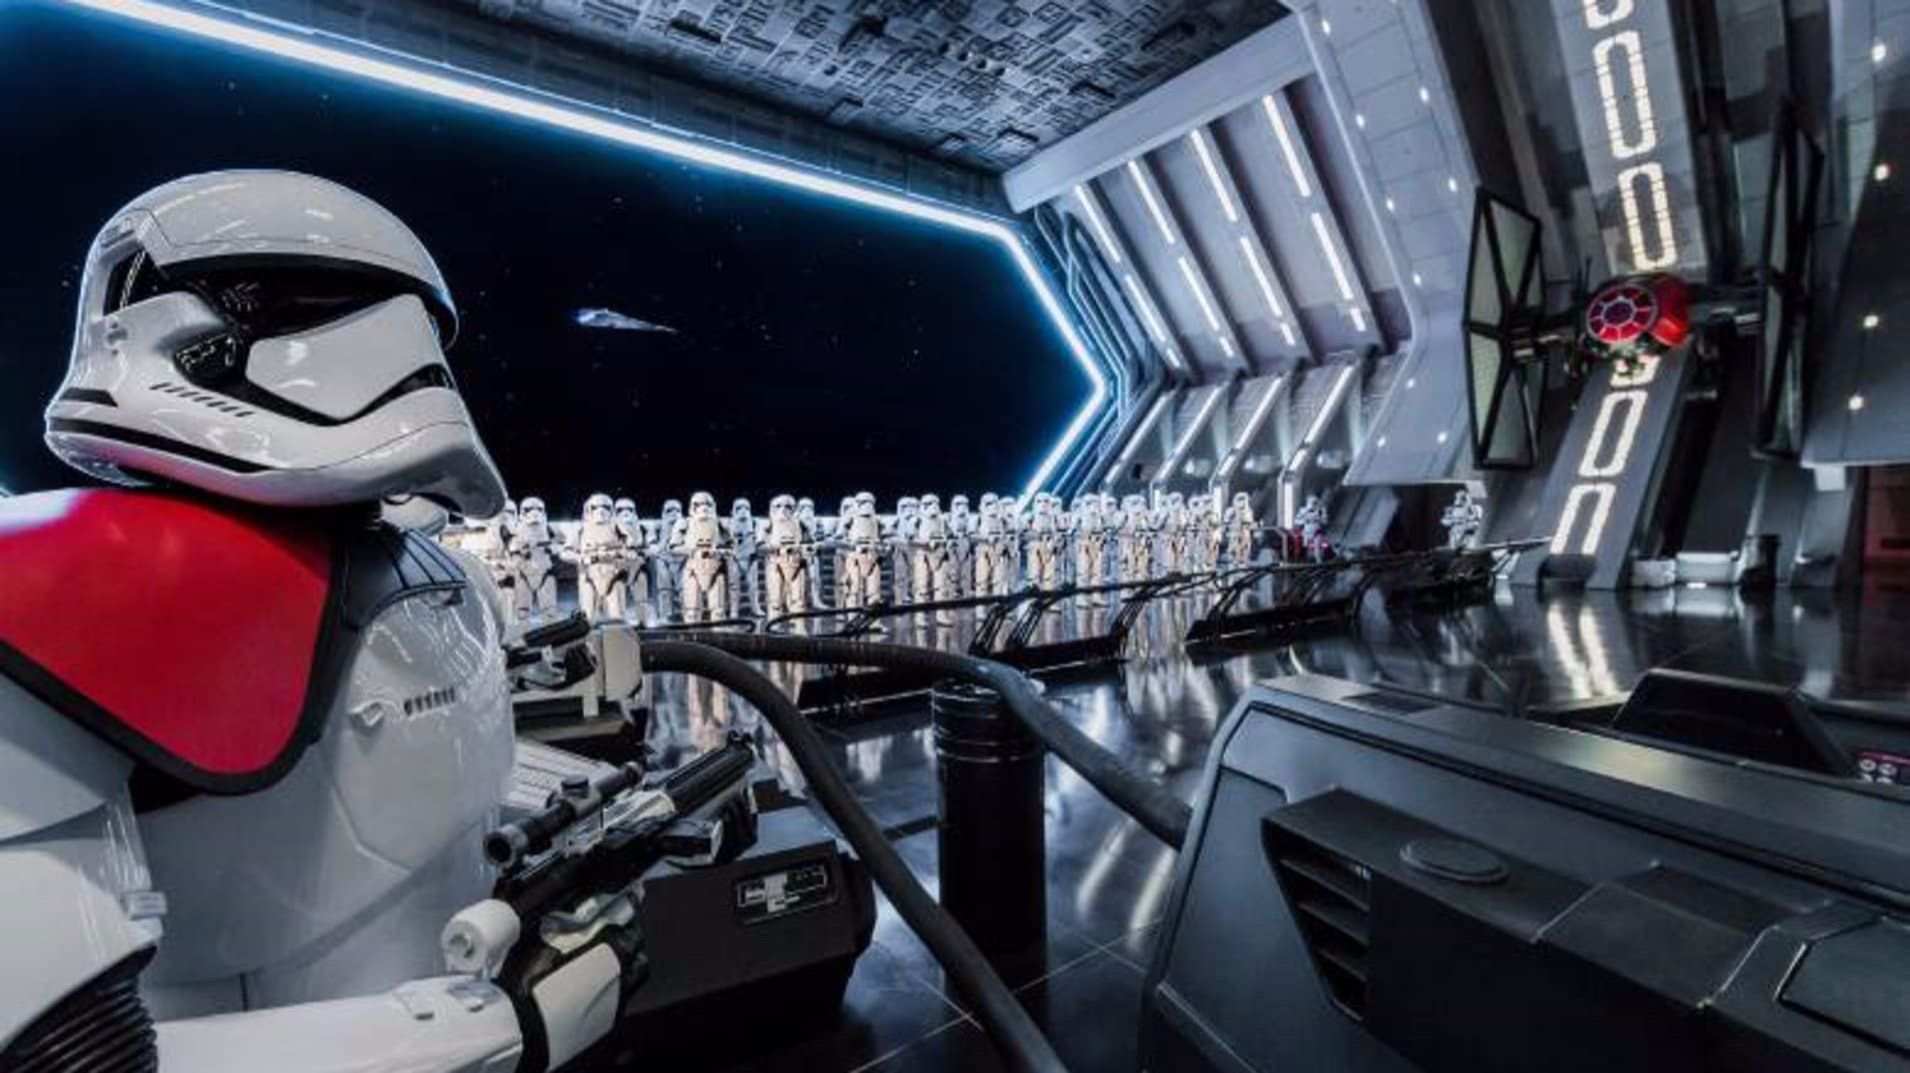 Rise of the Resistance art Star Wars Galaxy's Edge art